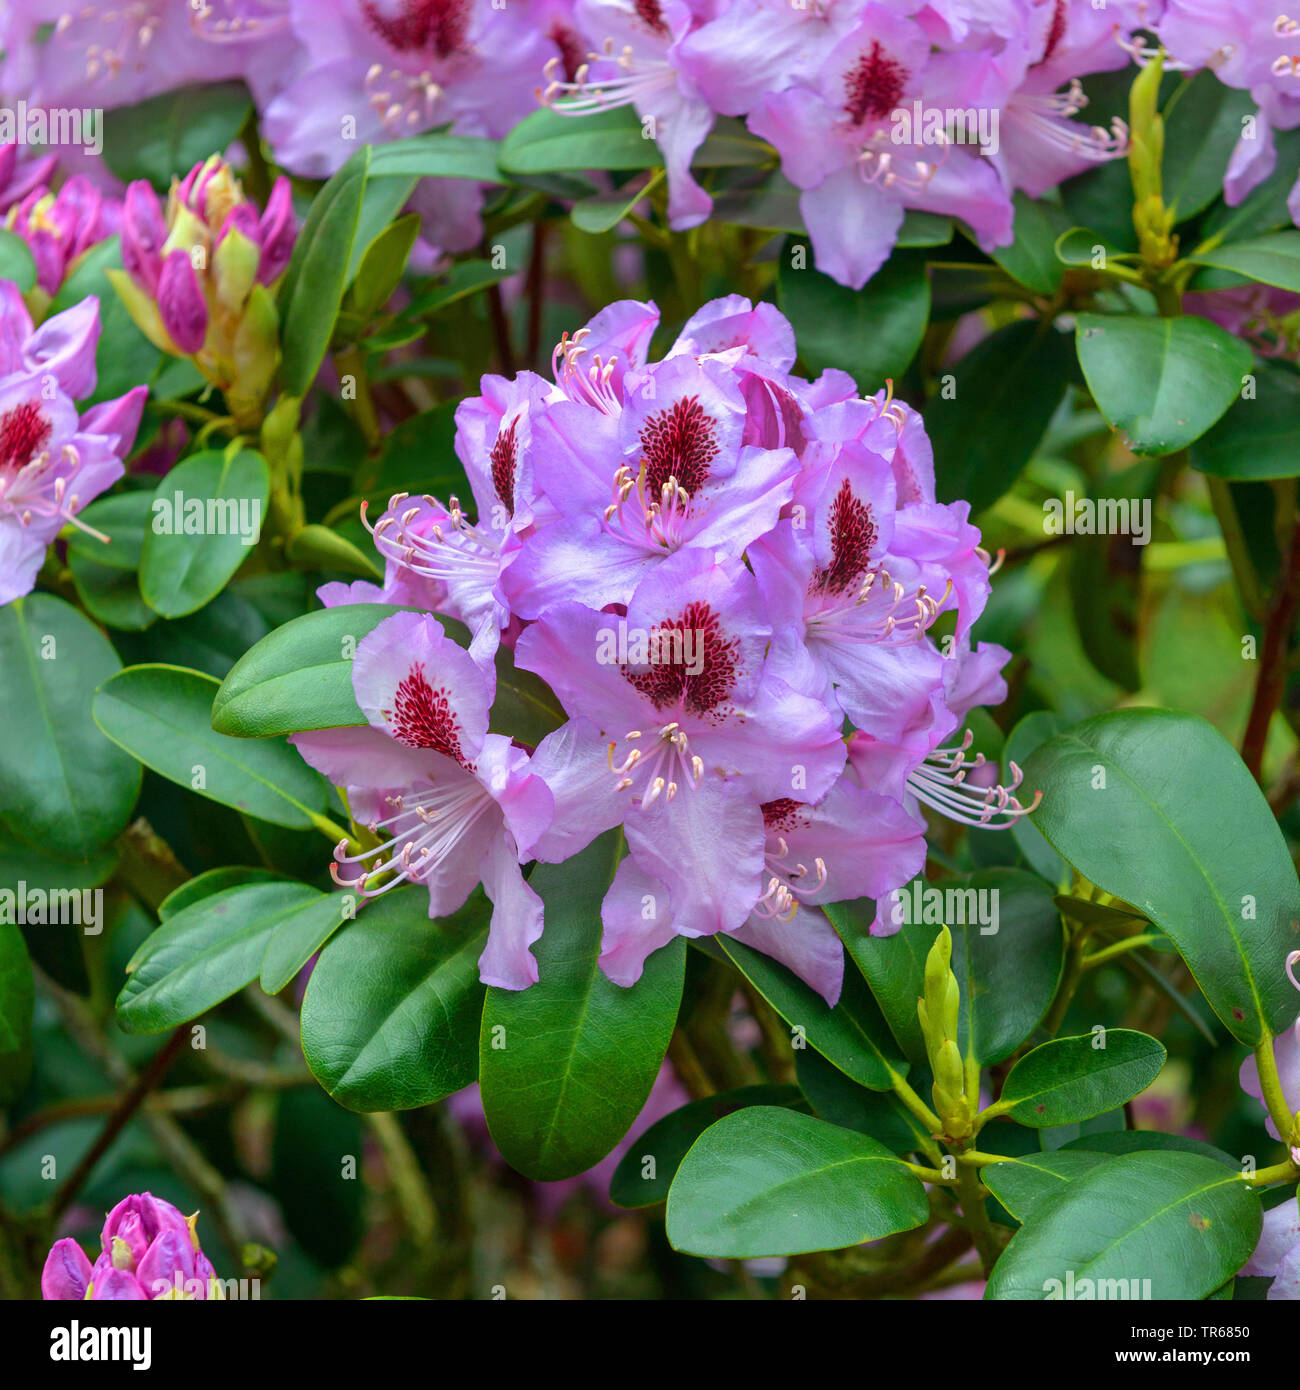 Catawba Catawba rododendro, Rose bay (Rhododendron "Humboldt", Rhododendron Humboldt, Rhododendron catawbiense), floreciendo, cultivar Humboldt Foto de stock